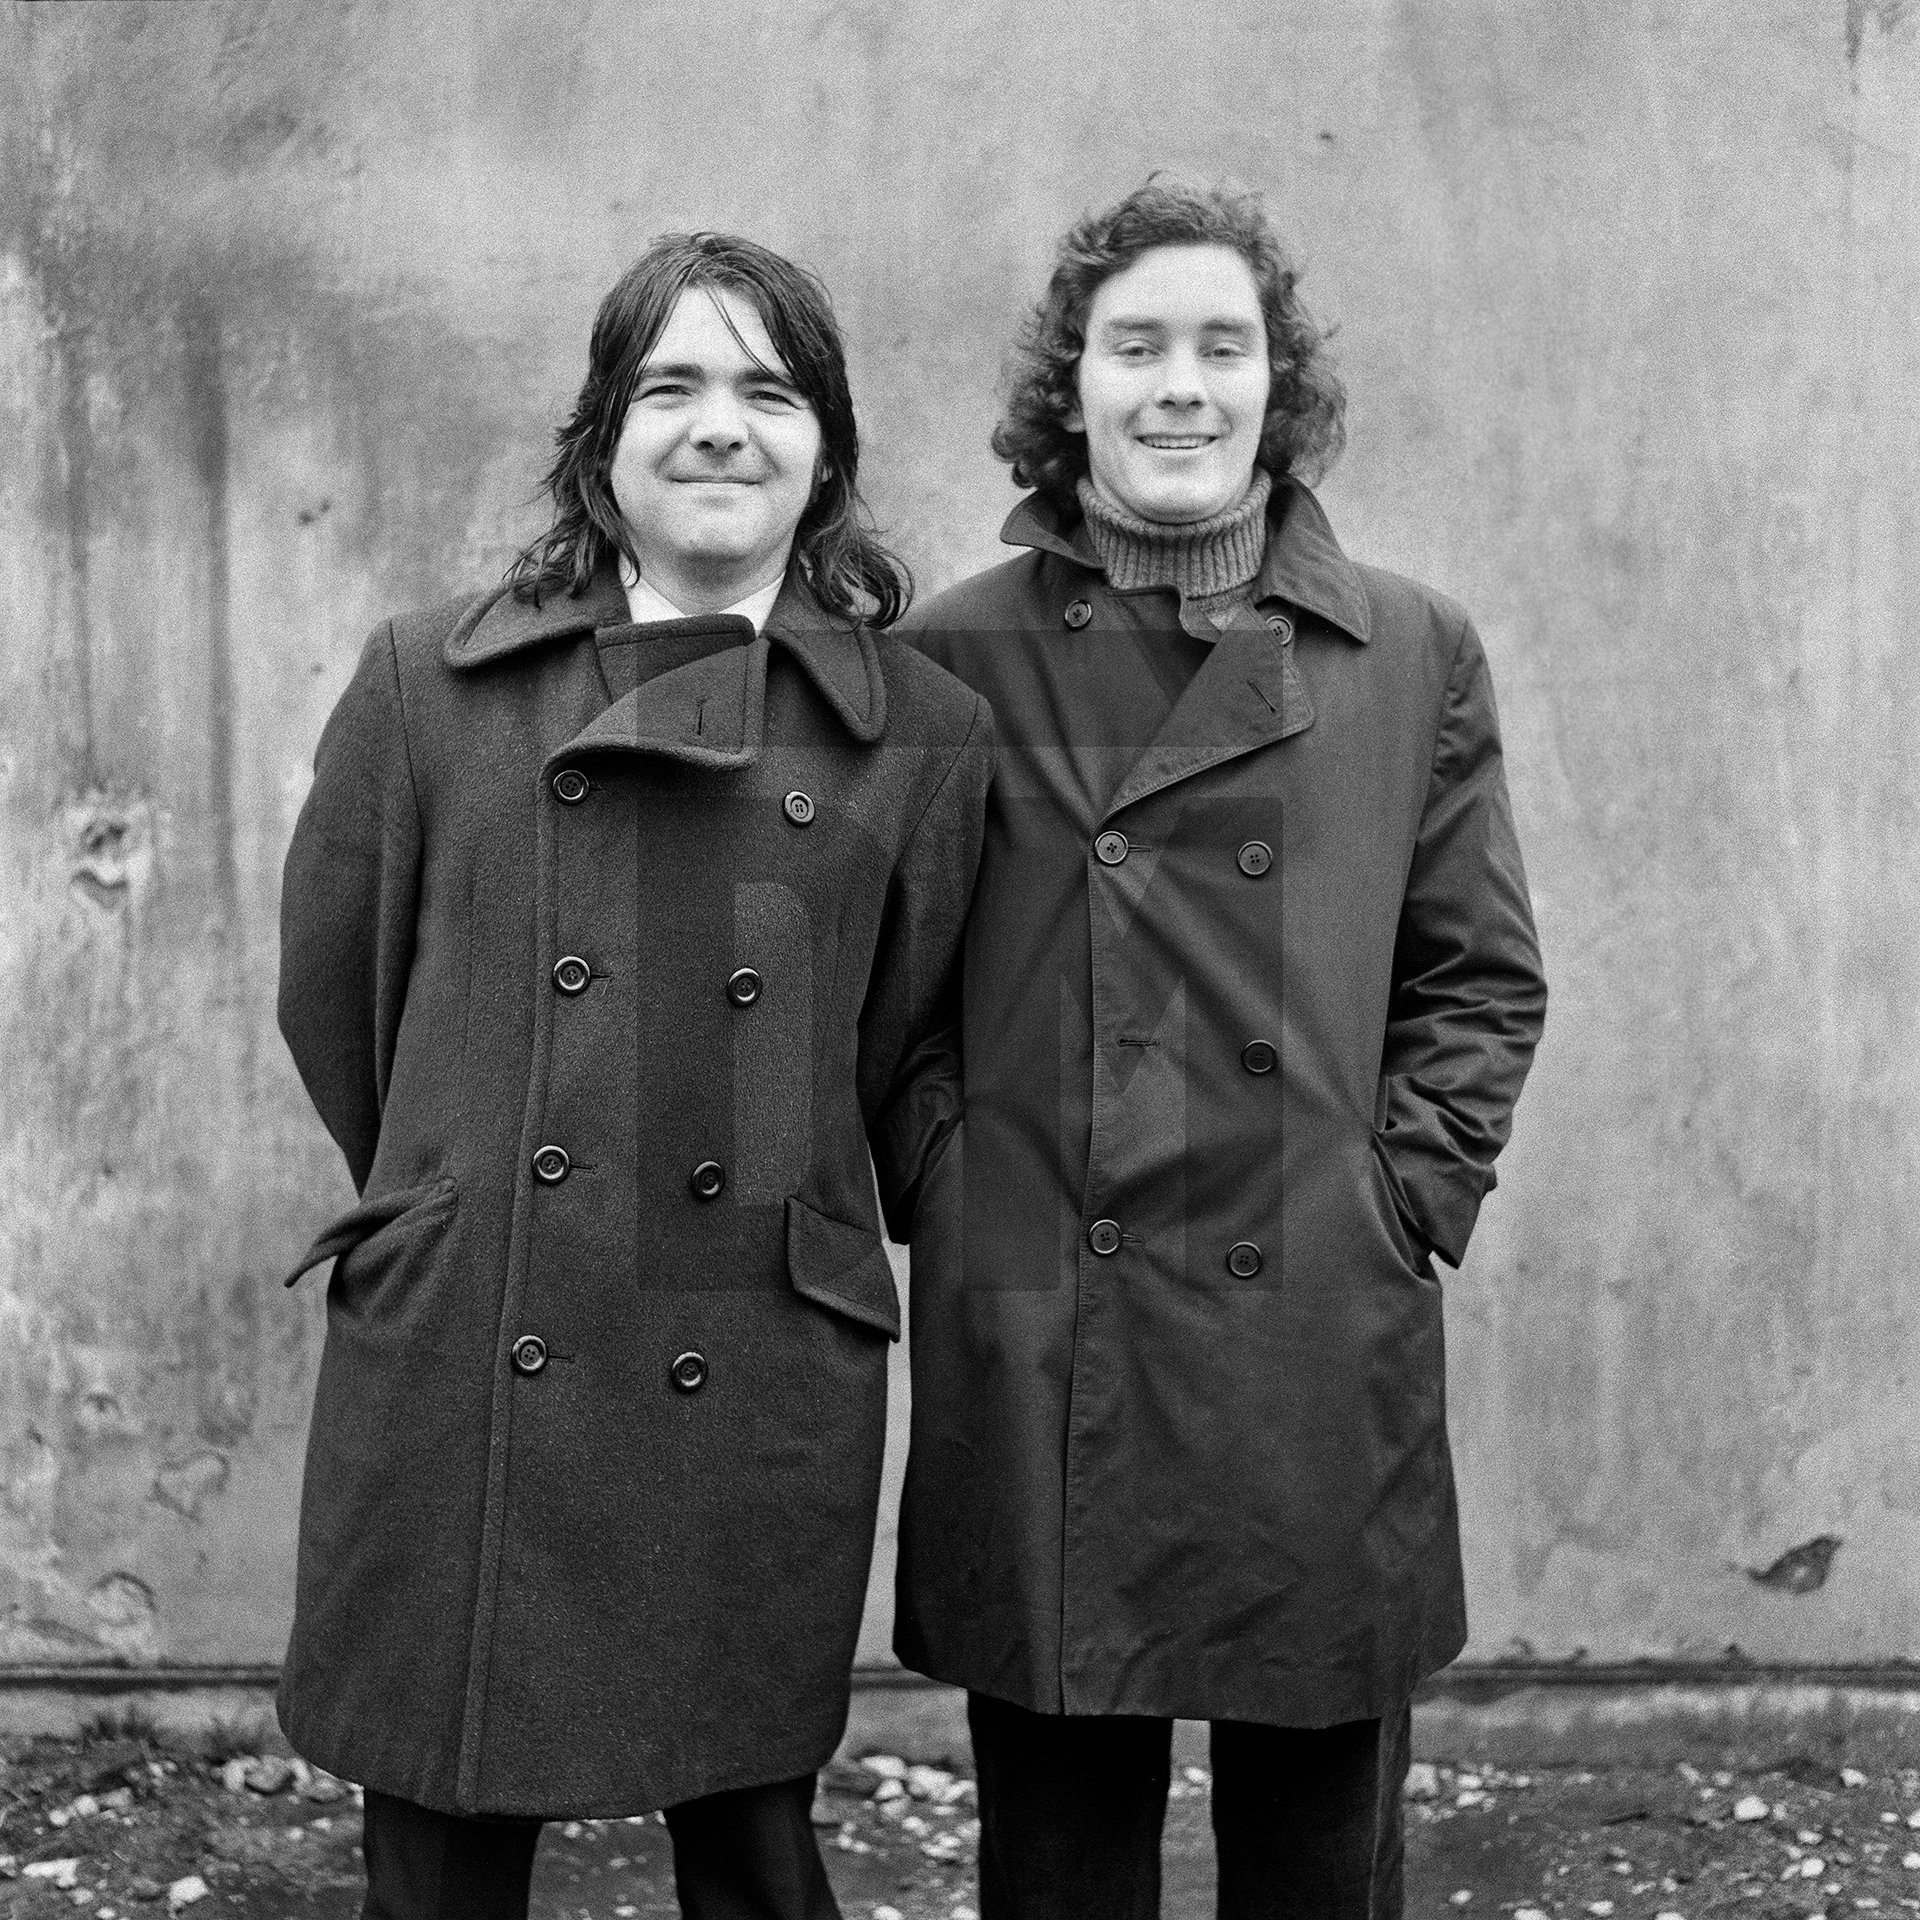 Left John Helling, right Brian Grafton, Barrow-in-Furness, Cumbria. November 1974 by Daniel Meadows